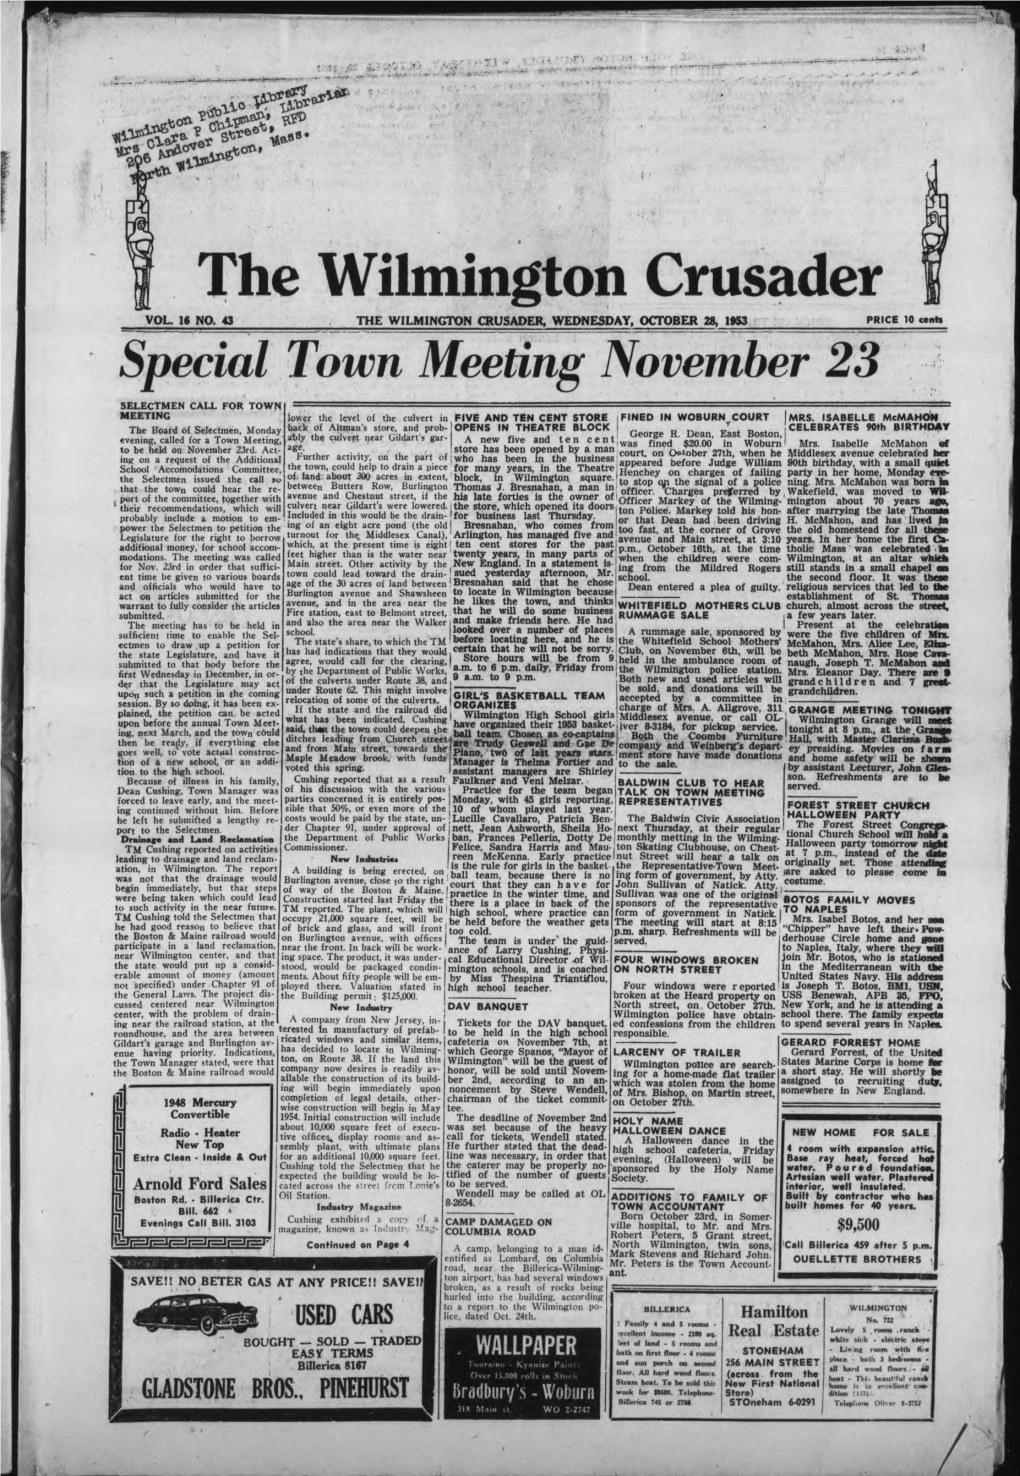 The Wilmington Crusader VOL